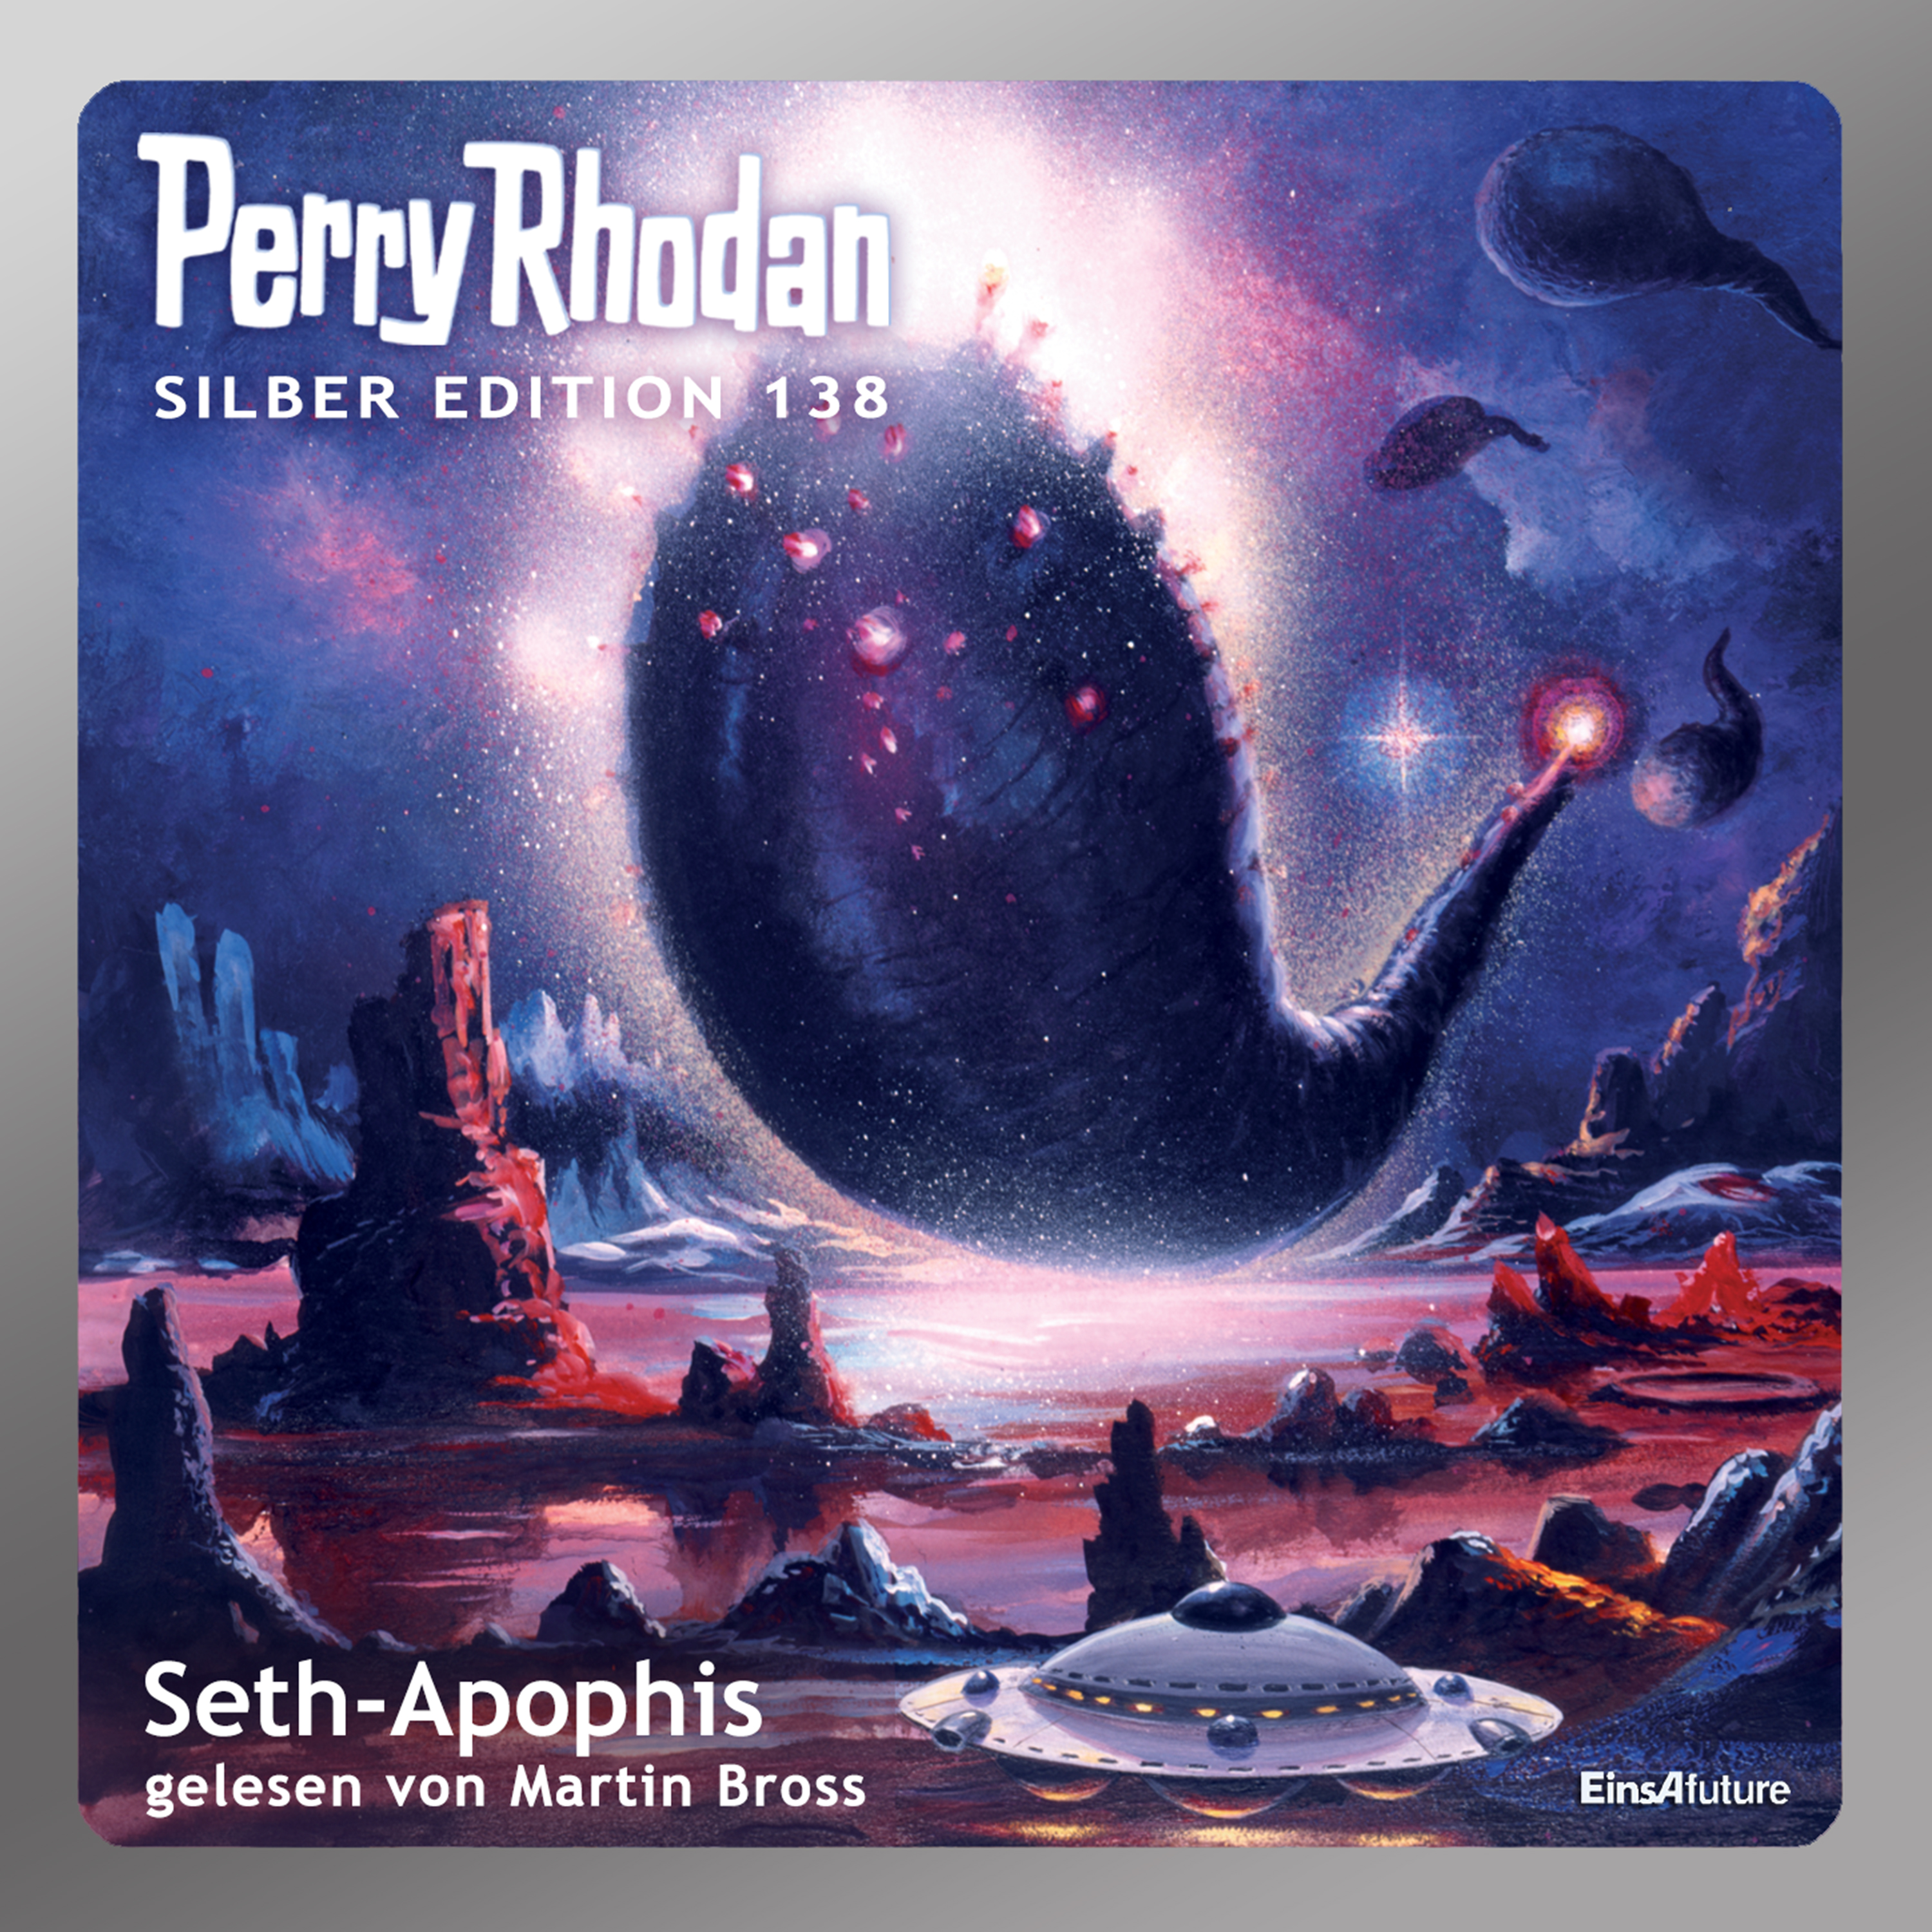 Perry Rhodan Silber Edition 138: Seth-Apophis (Komplett-Download)